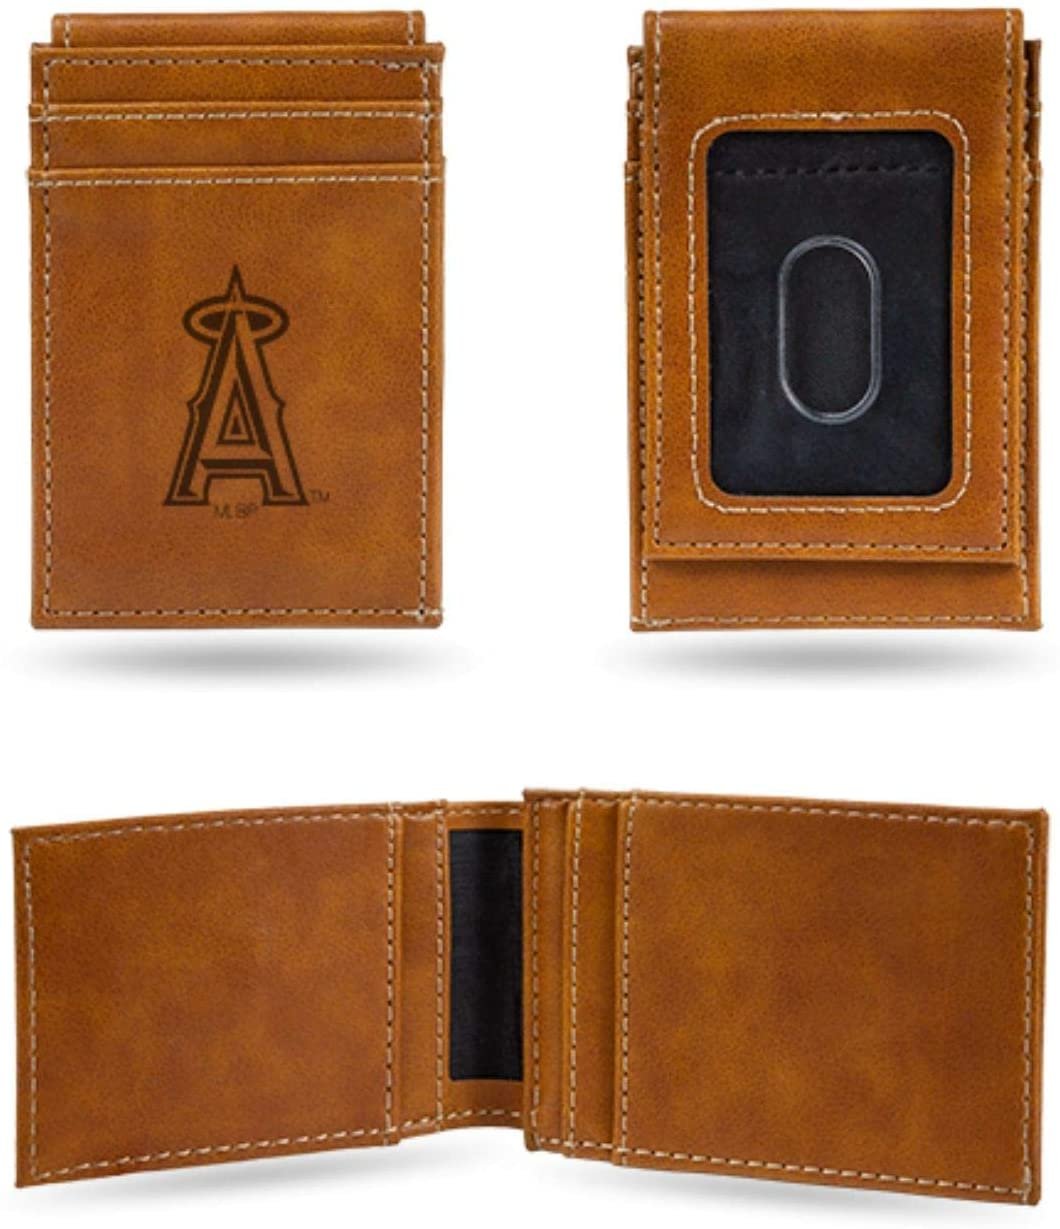 Los Angeles Angels Premium Brown Leather Wallet, Front Pocket Magnetic Money Clip, Laser Engraved